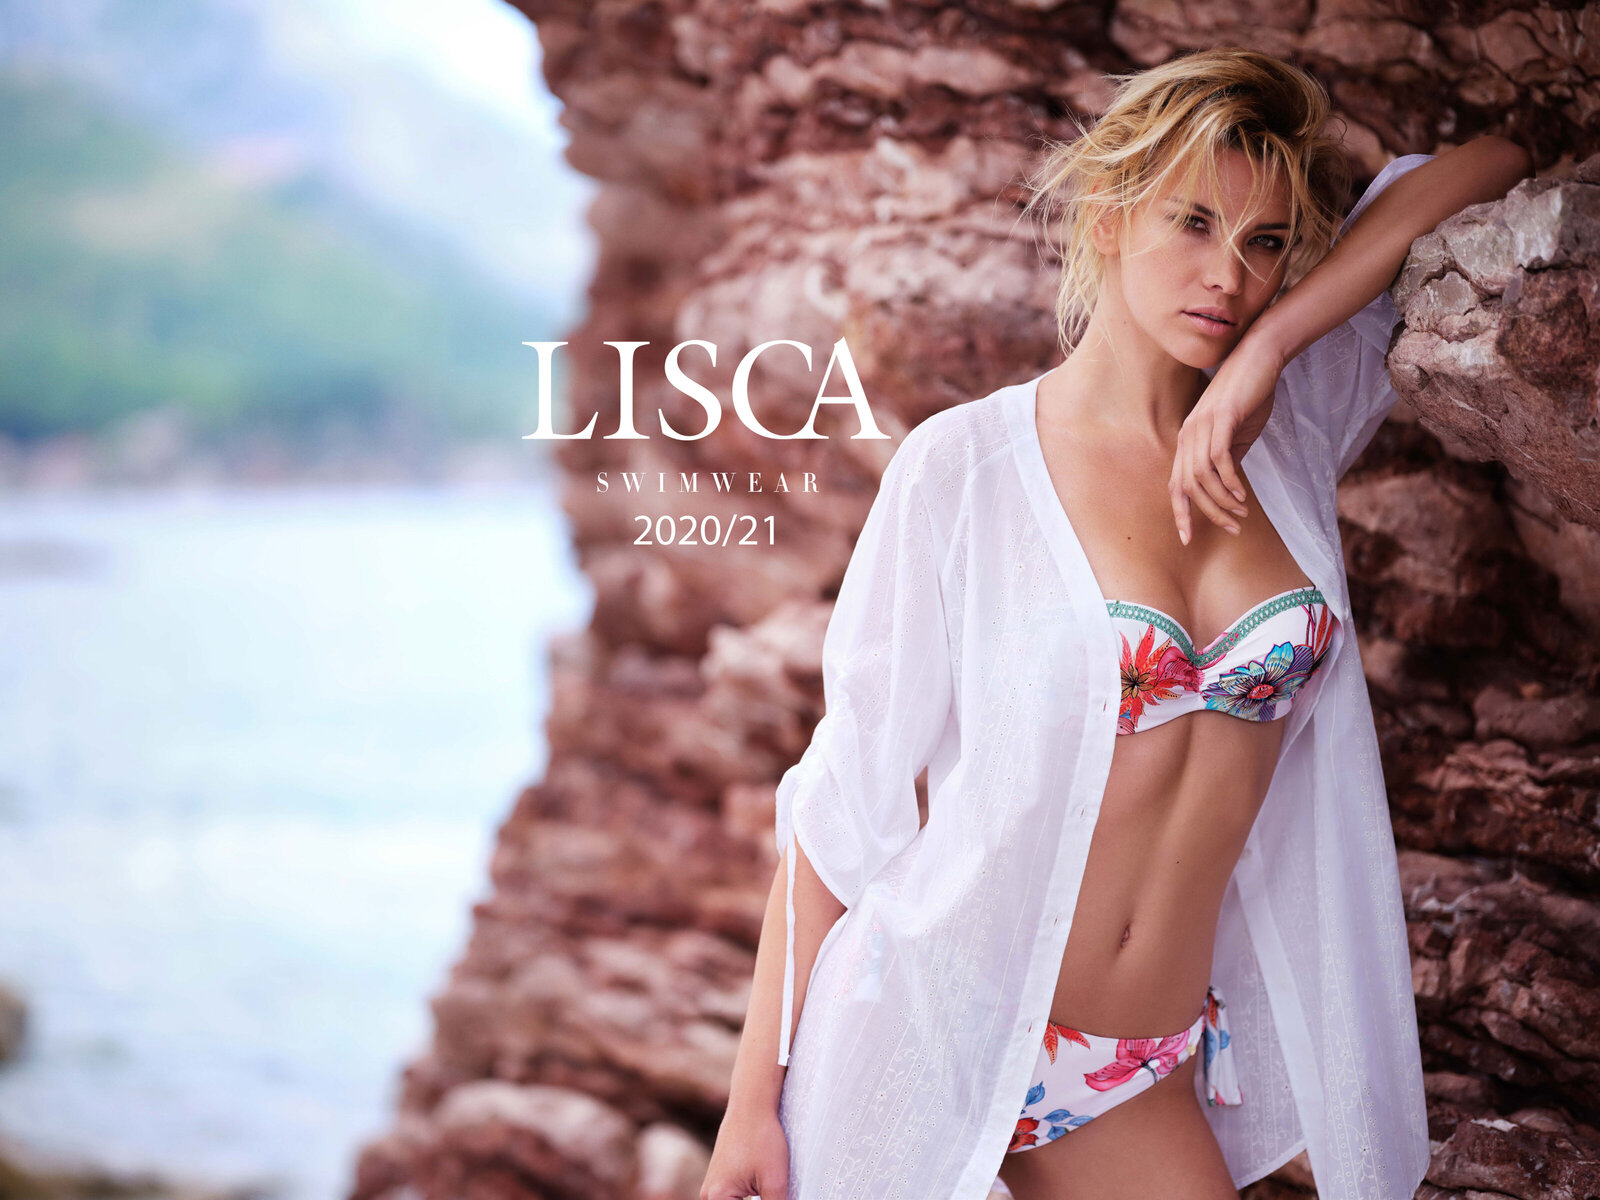 Lisca-swimwear-campaign-Sfumato-makeup-Mitja-Bozic-lingerie-swimwear-photographer